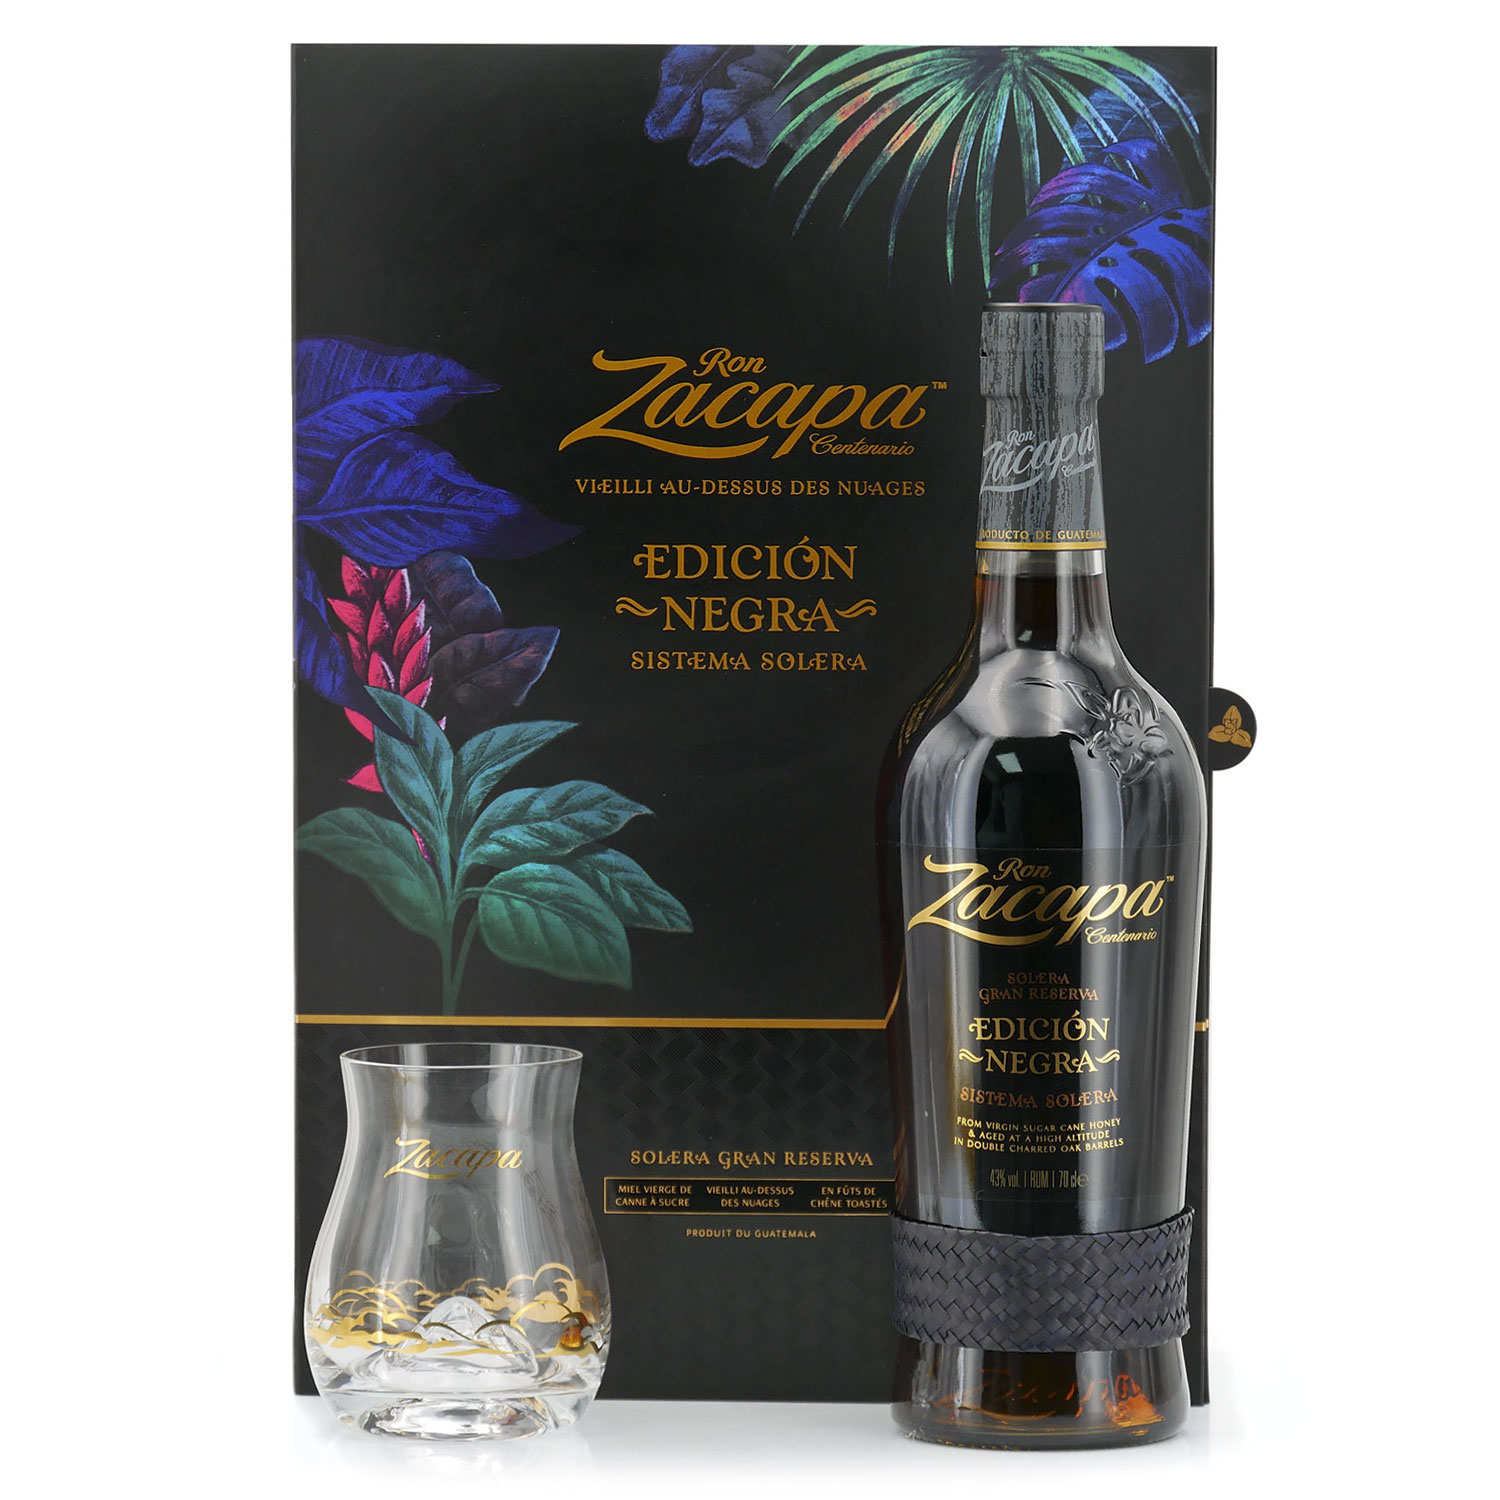 Rædsel morder lounge Zacapa Edicion Negra - Rum Gift Box With 2 Glasses - Zacapa